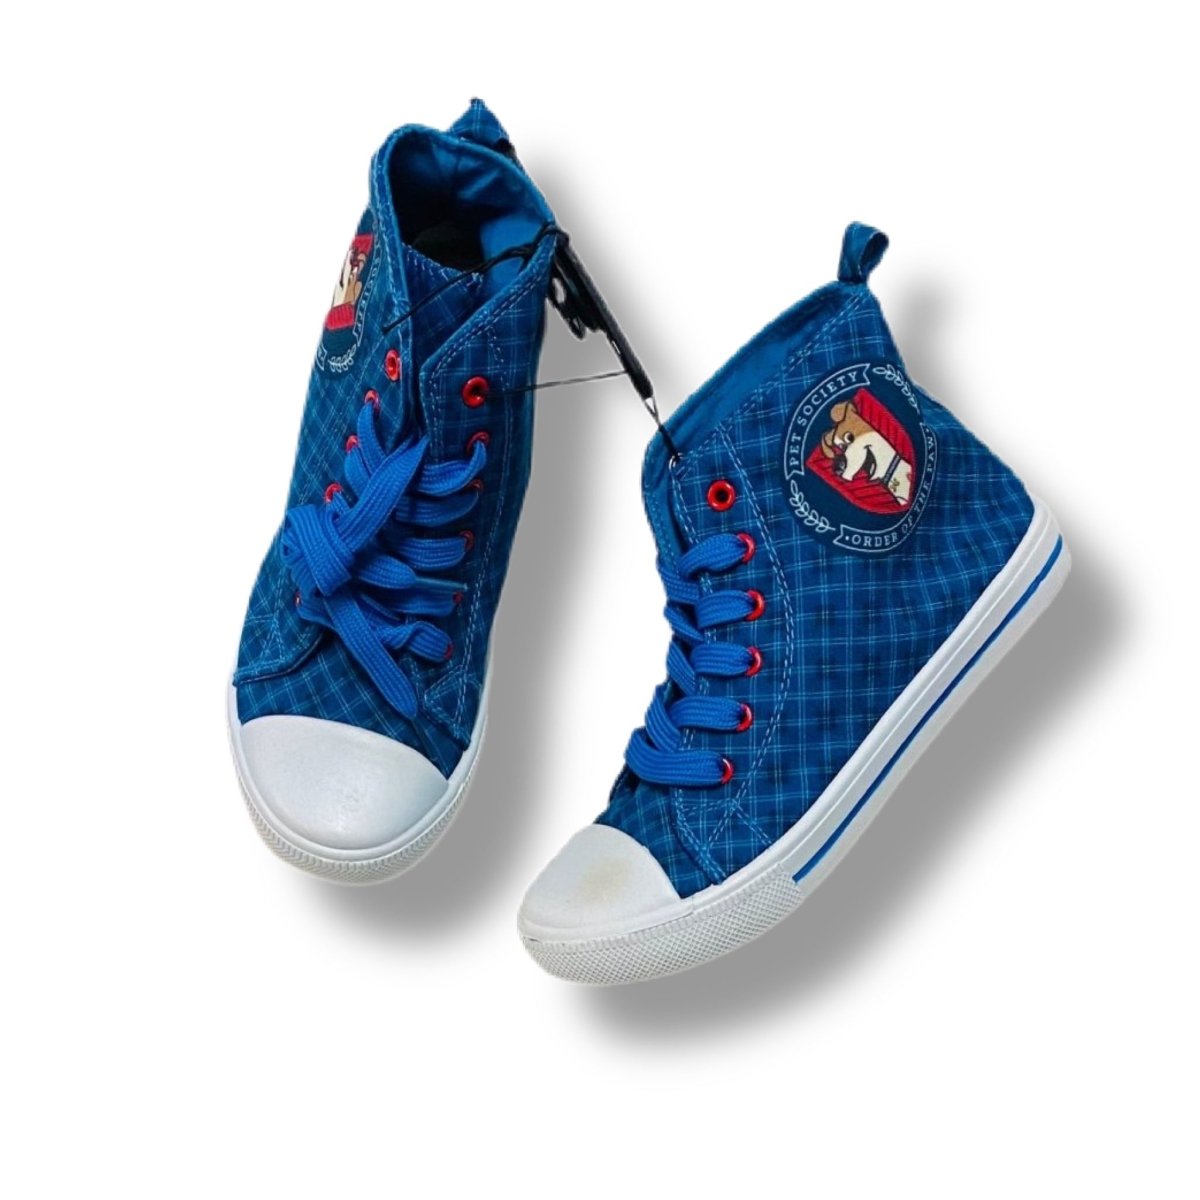 Sneakers Pets blu alta - Mstore016 - sneaker bimbo - Pj Masks